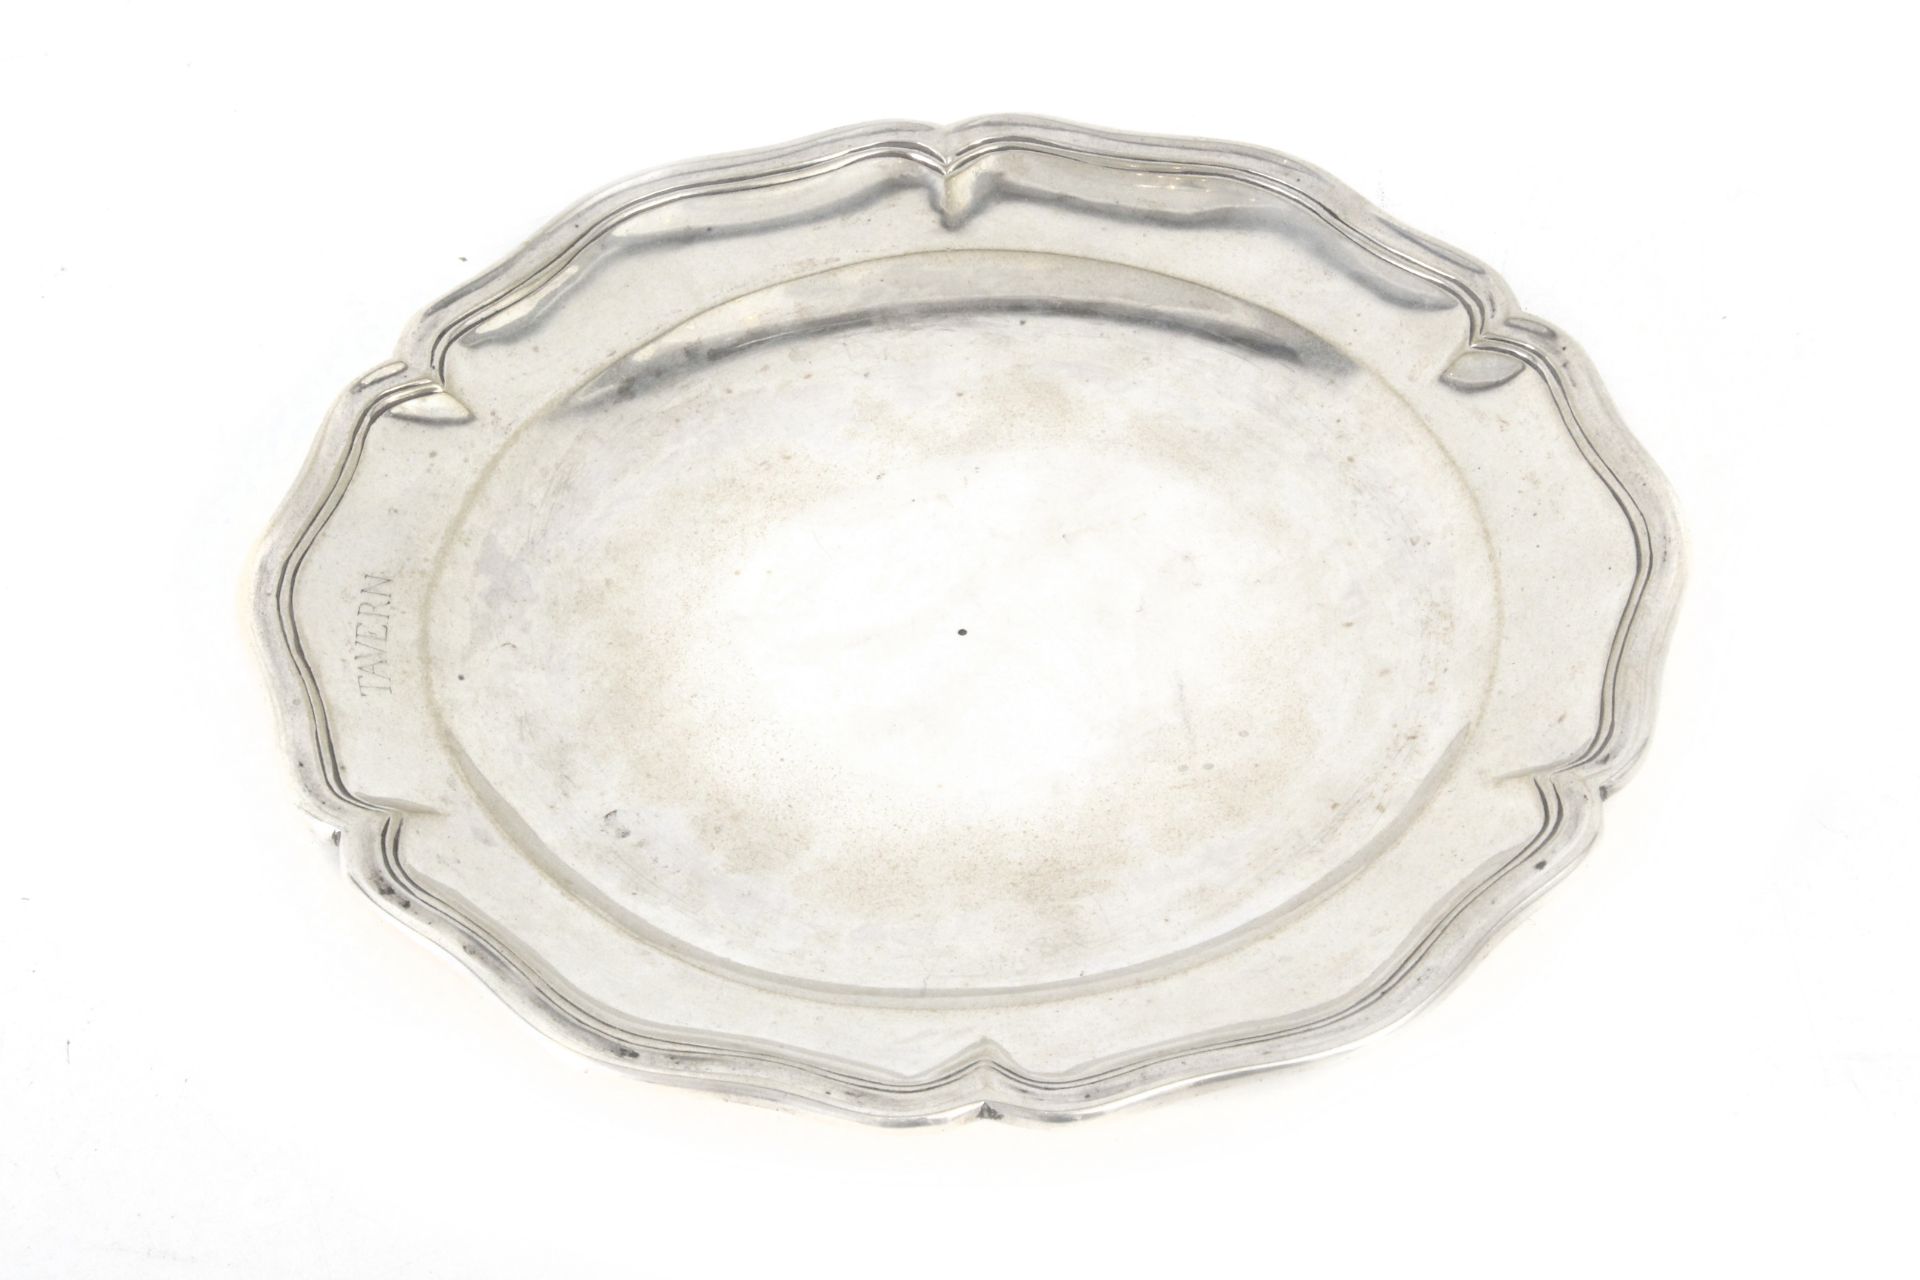 A 19th century silver tray